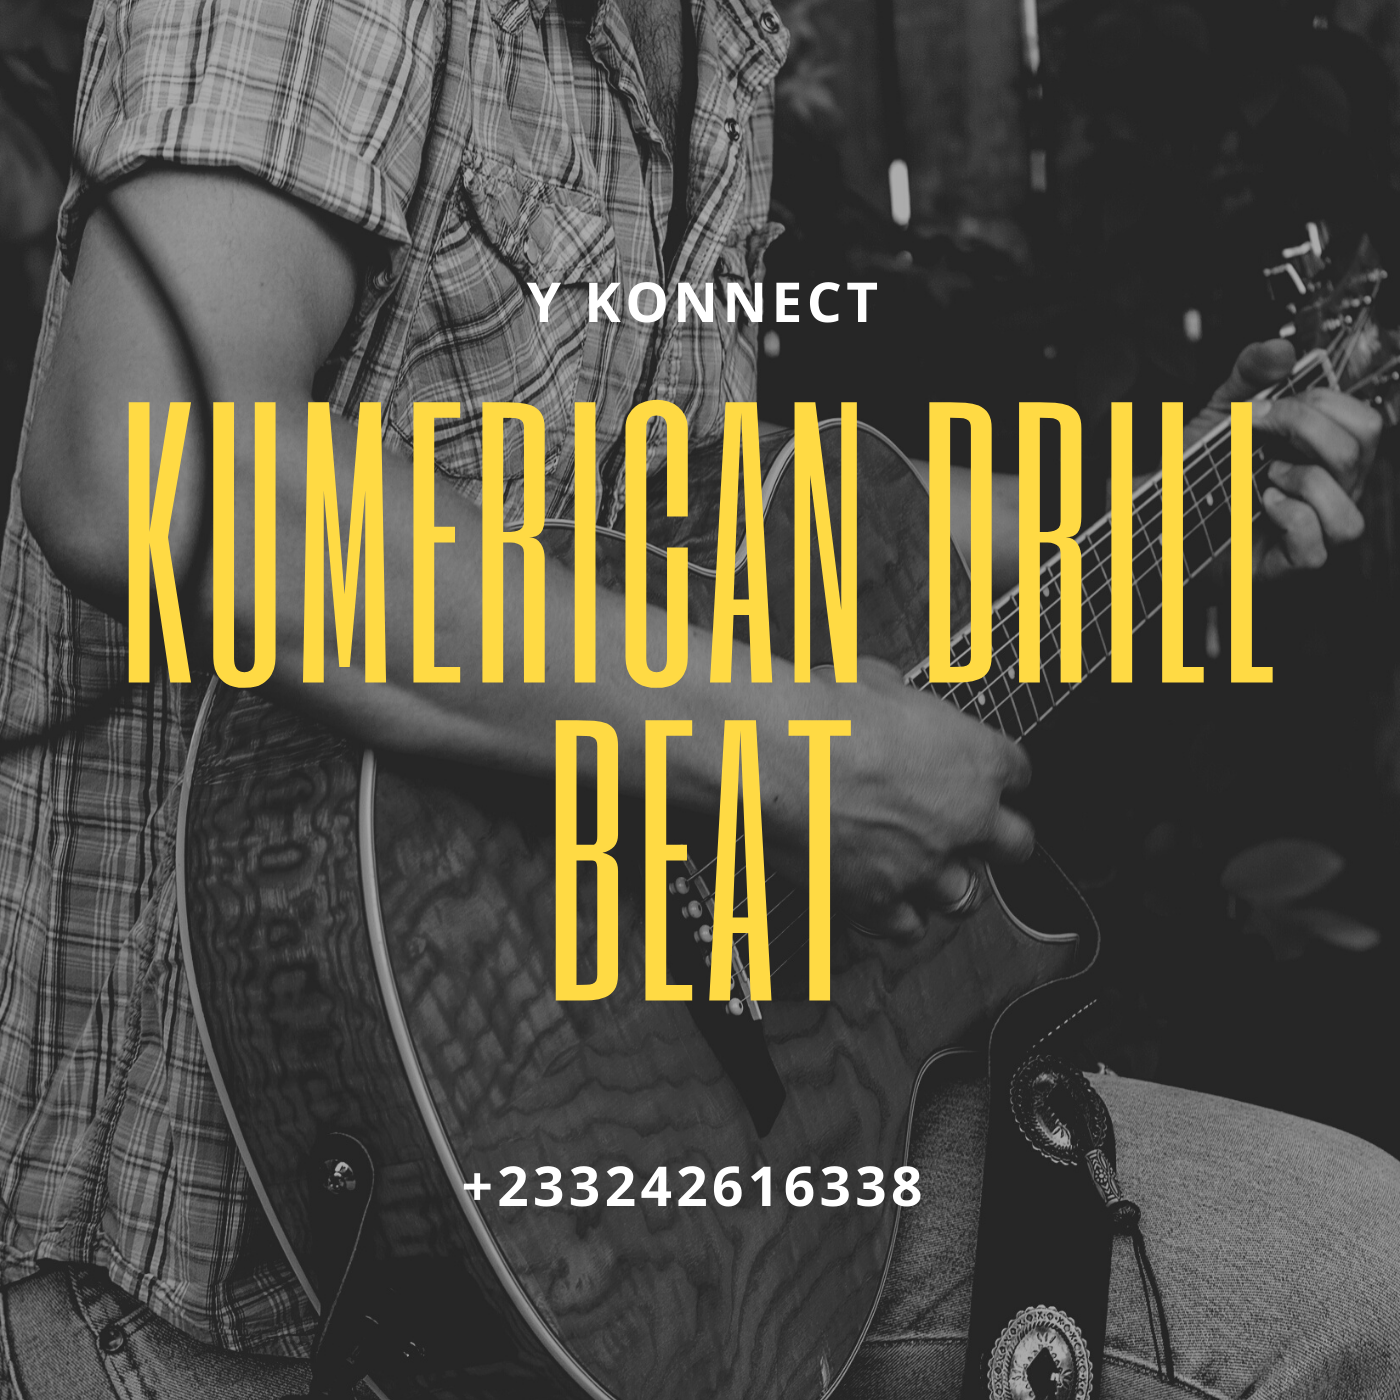 Y Konnect - Kumerican Drill Beat